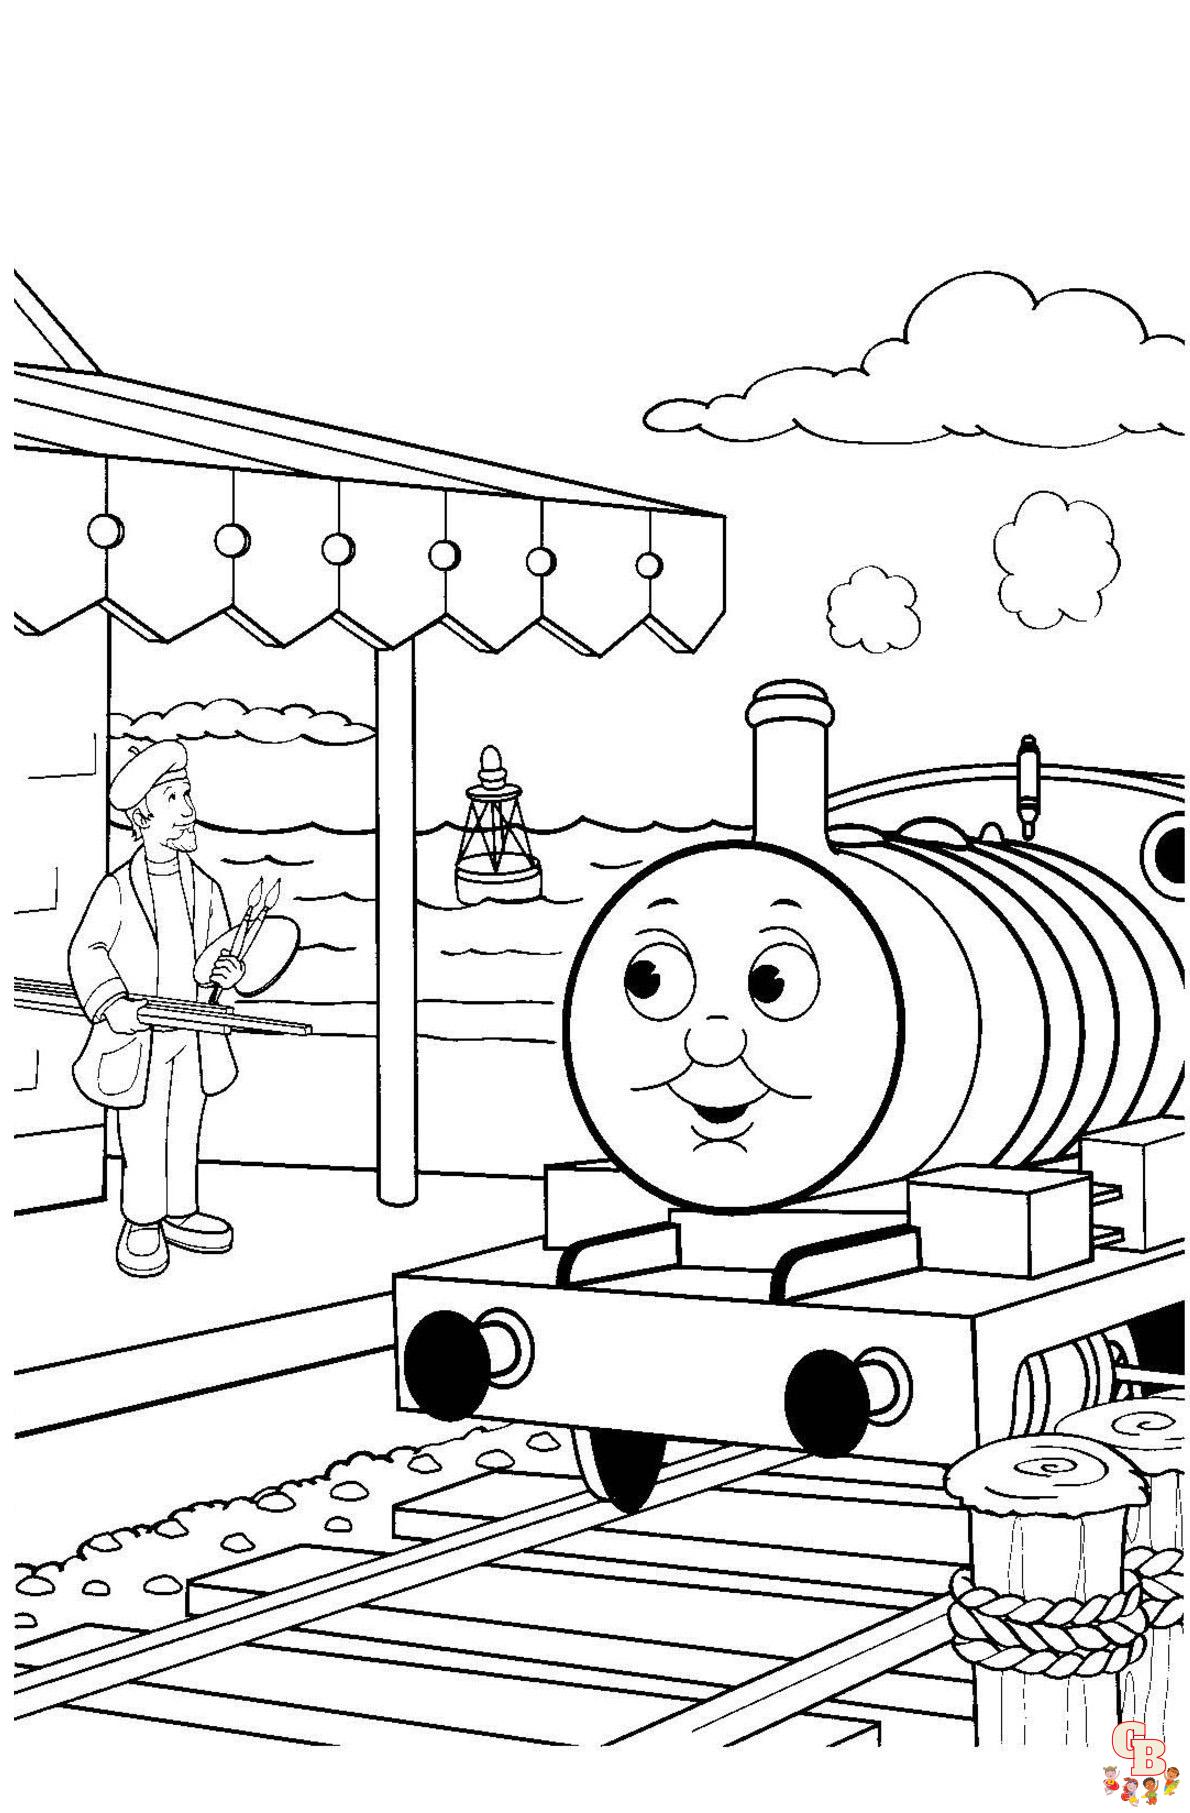 Thomas the Tank Engine pentru colorat